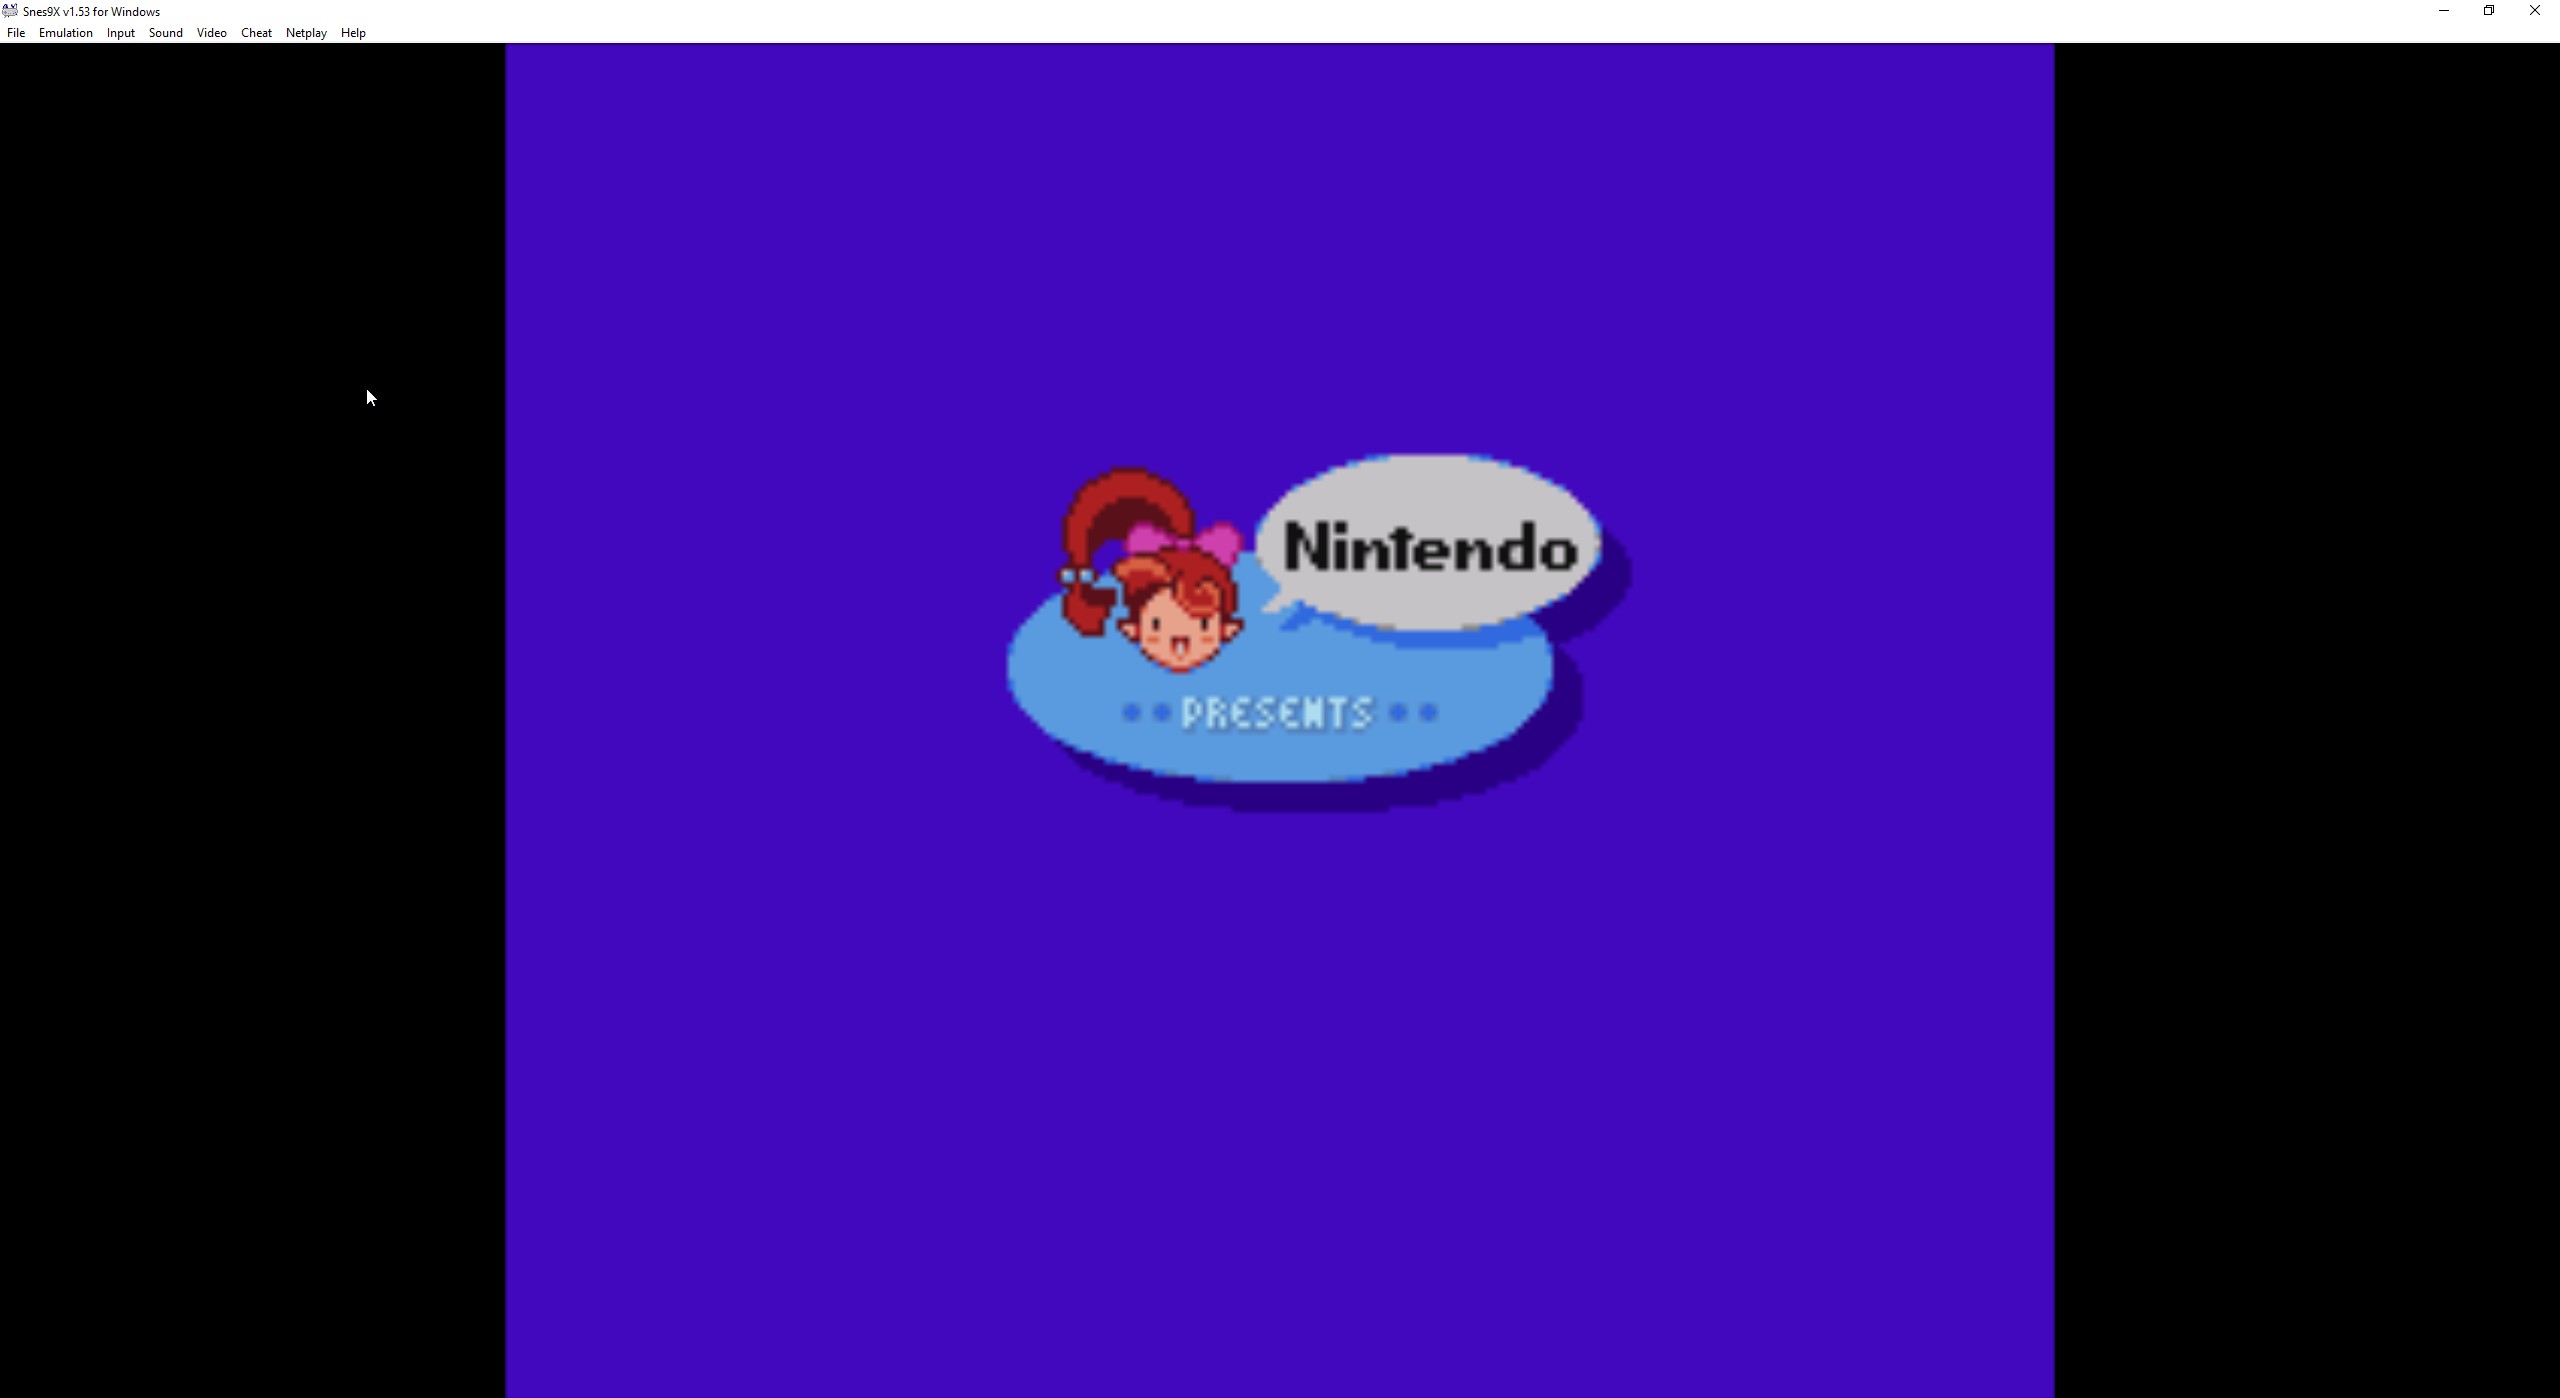 Snes9x 3DS - Nintendo SNES / SFC - Downloads - Emulators